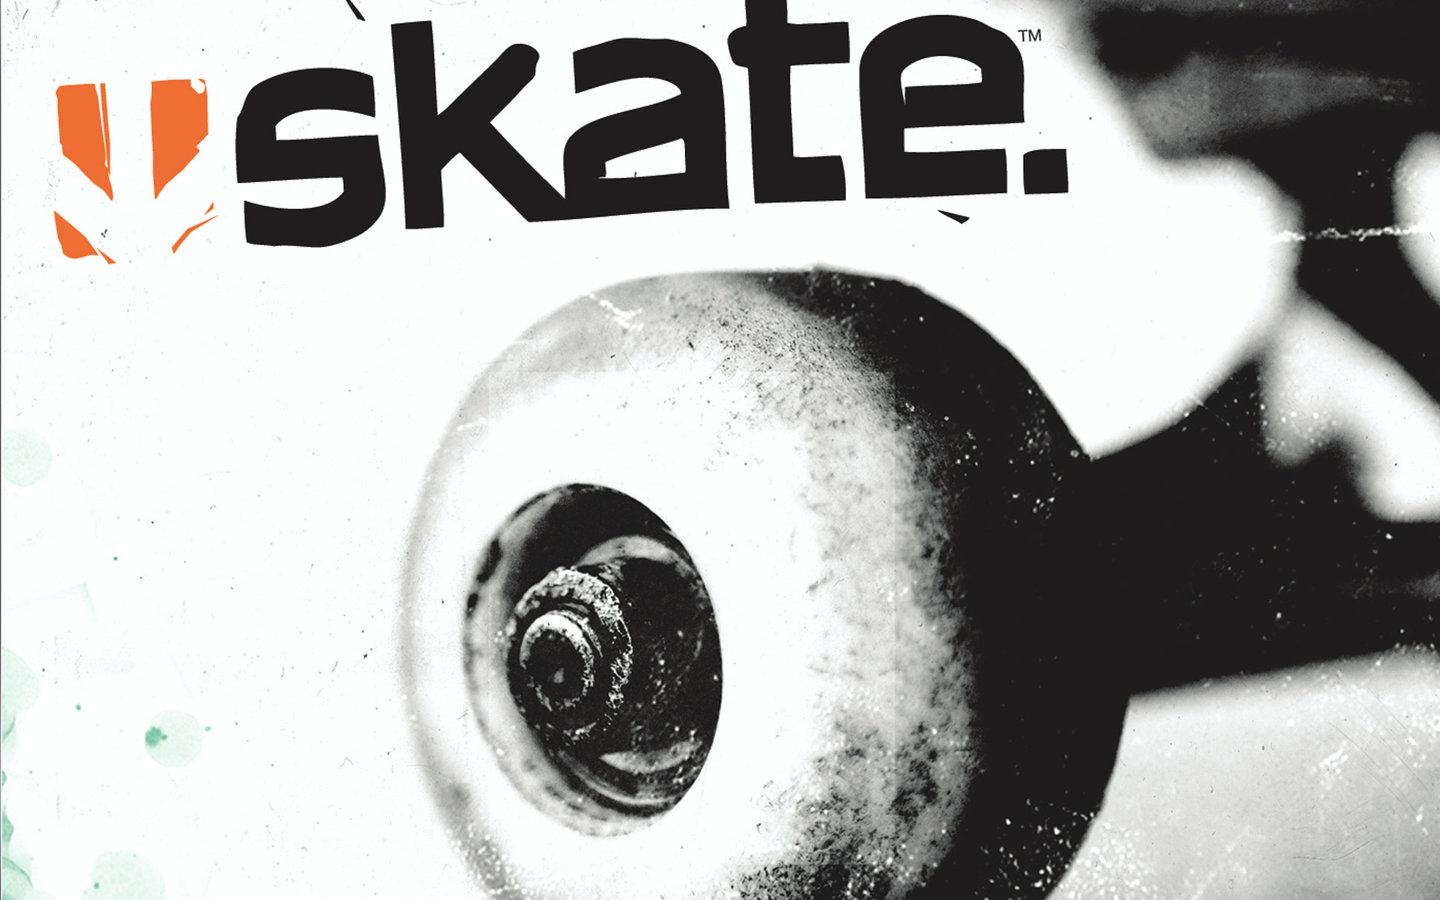 skate. - Xbox 360 Wallpaper